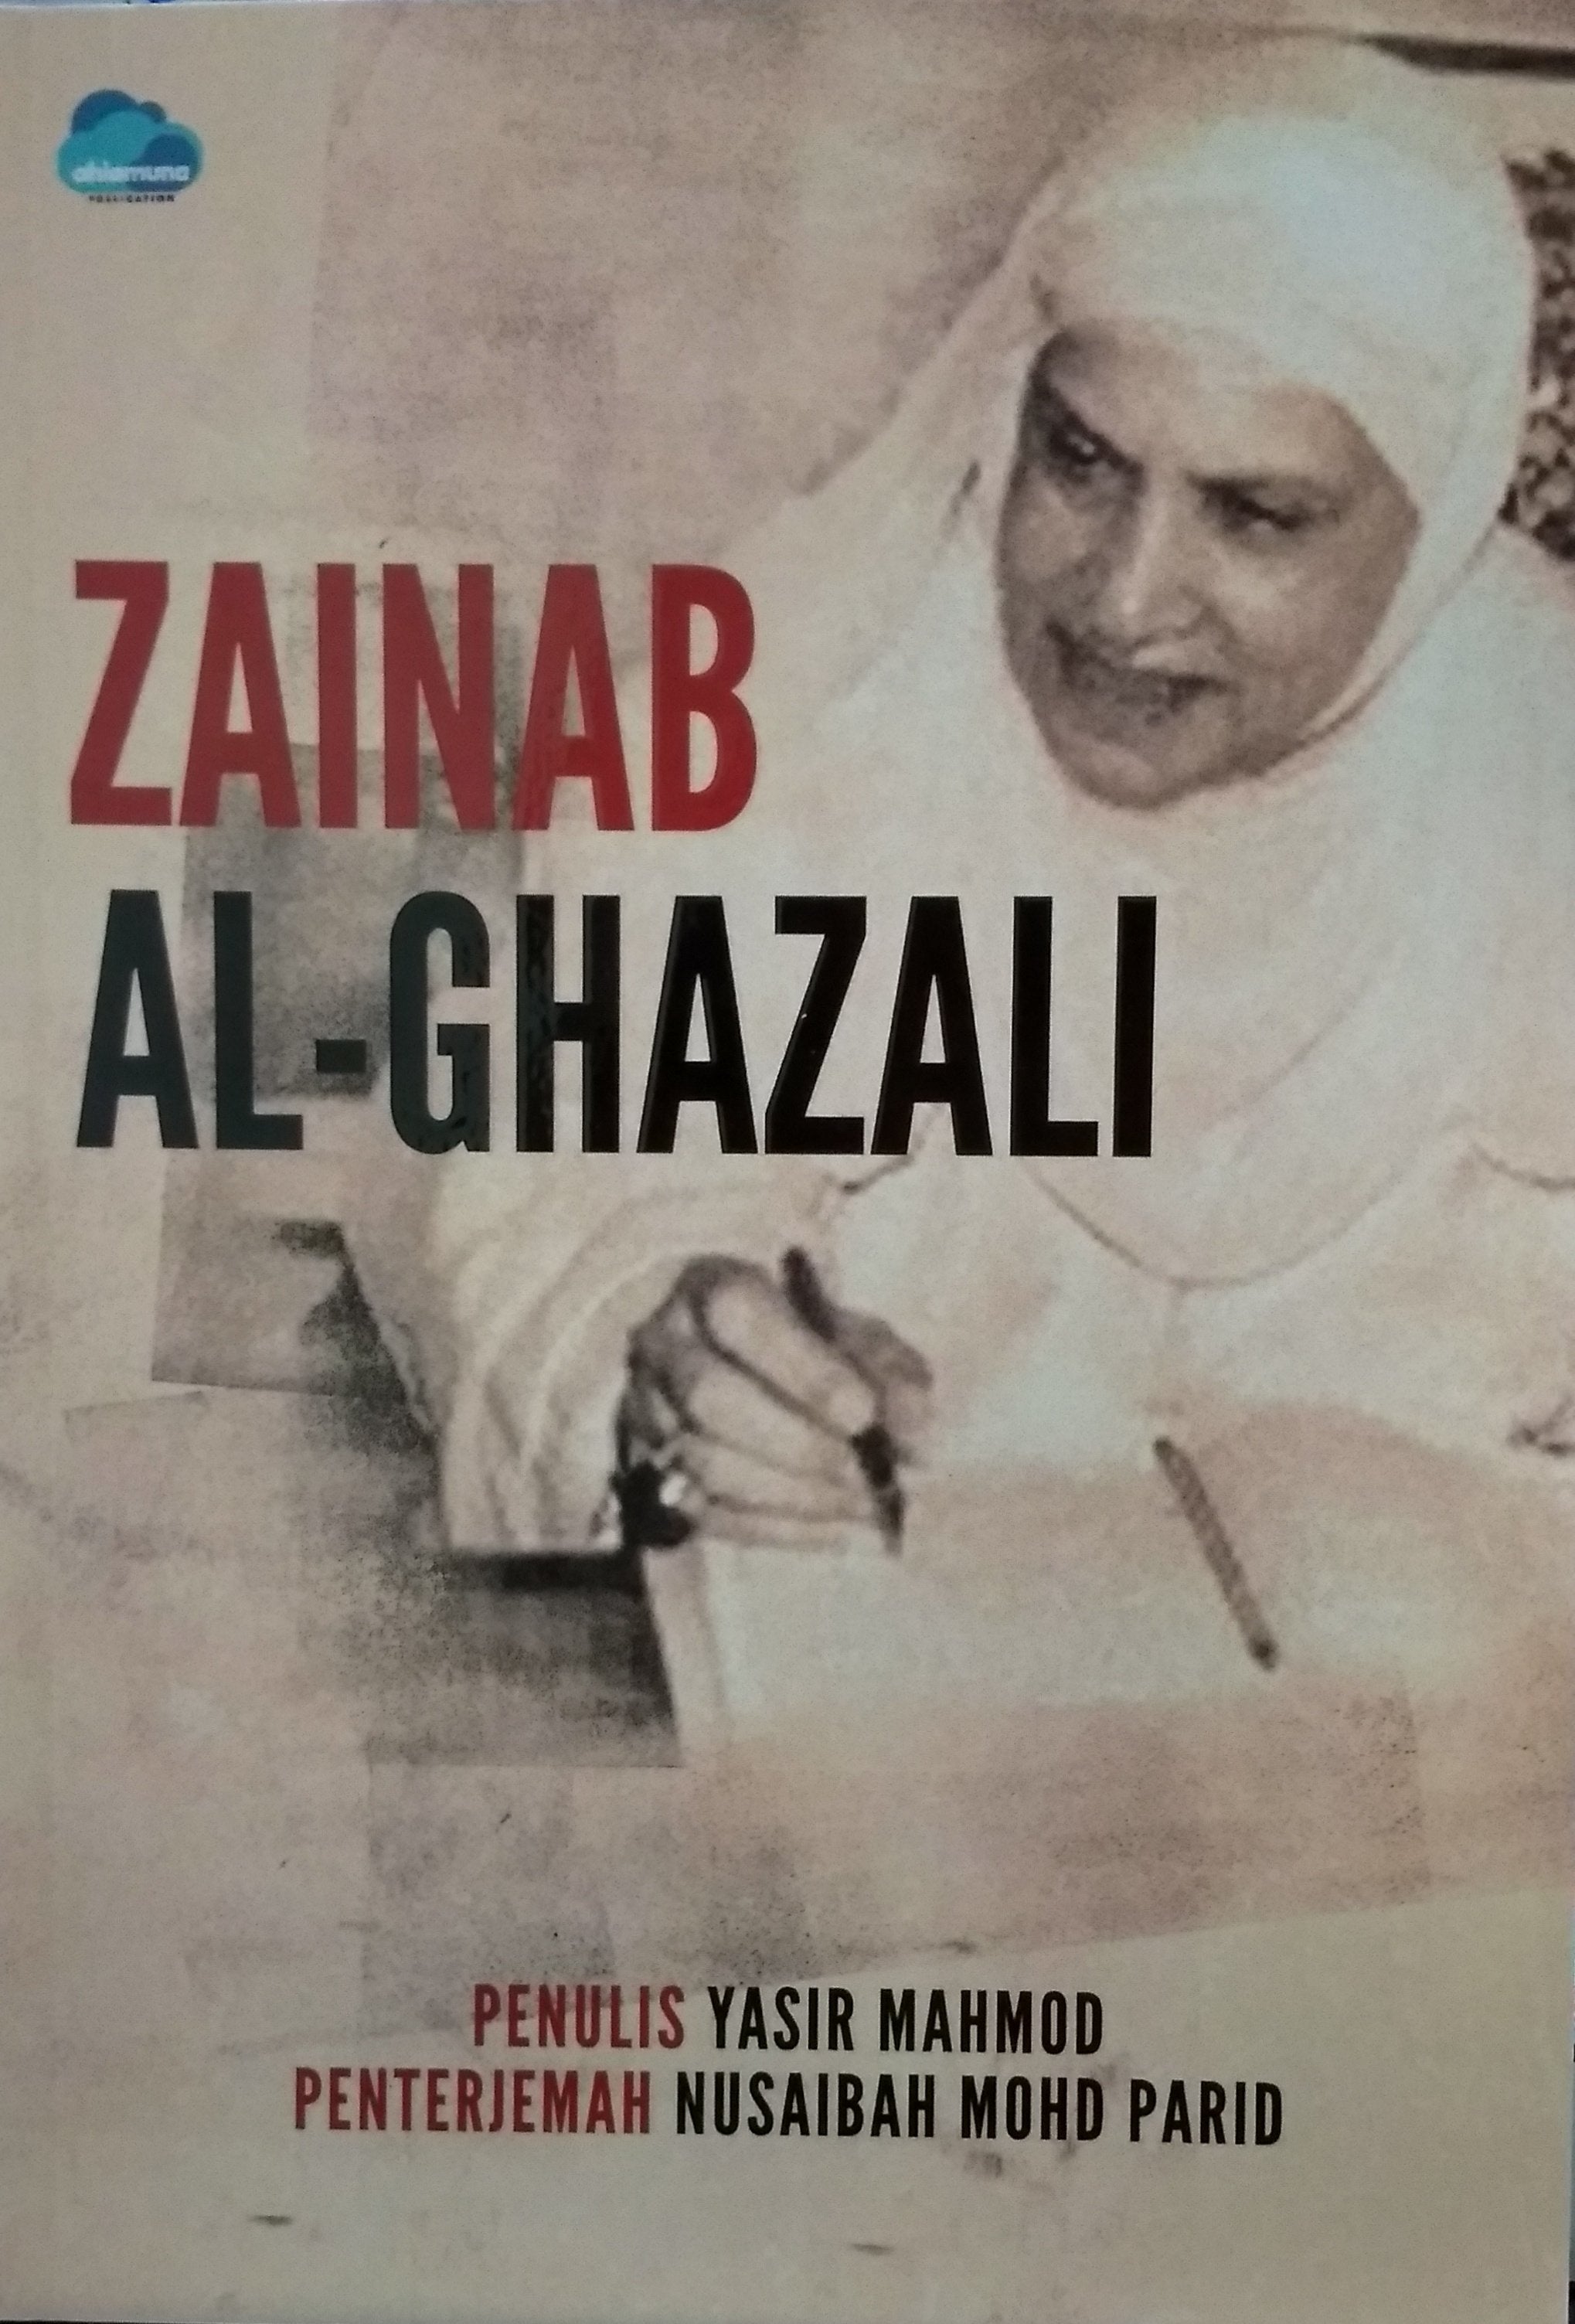 Zainab Al-Ghazali - Iman Shoppe Bookstore (1530850345017)